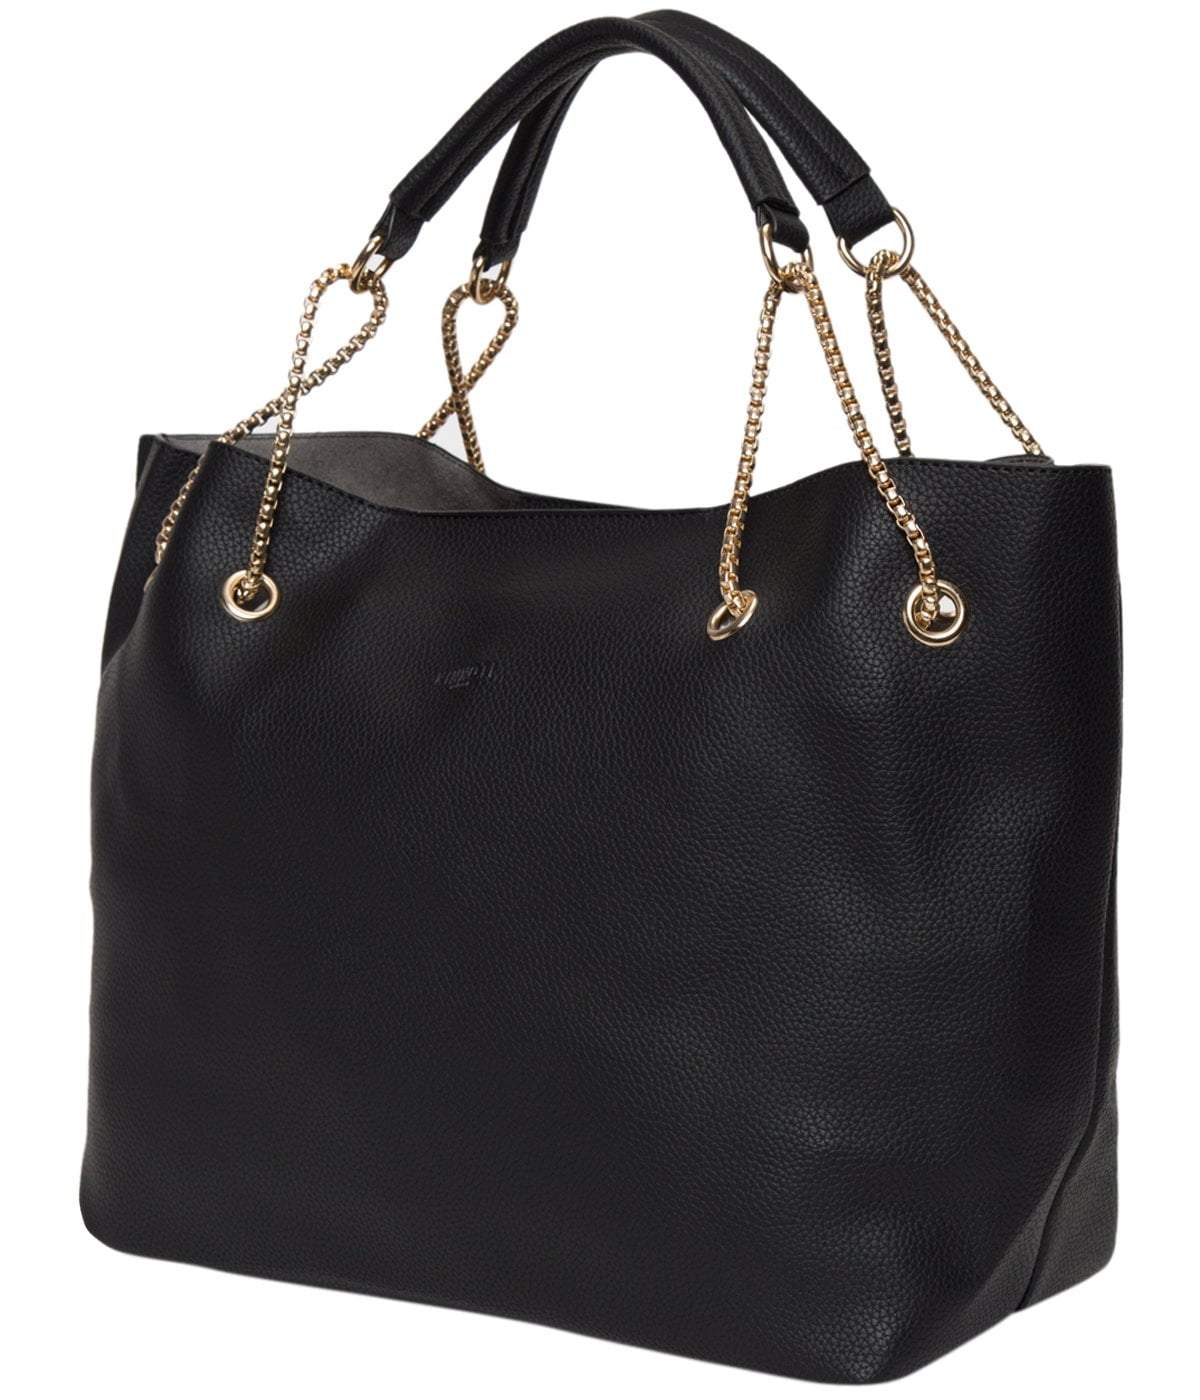 kinnoti Handbags Black color Chain Tote Bag